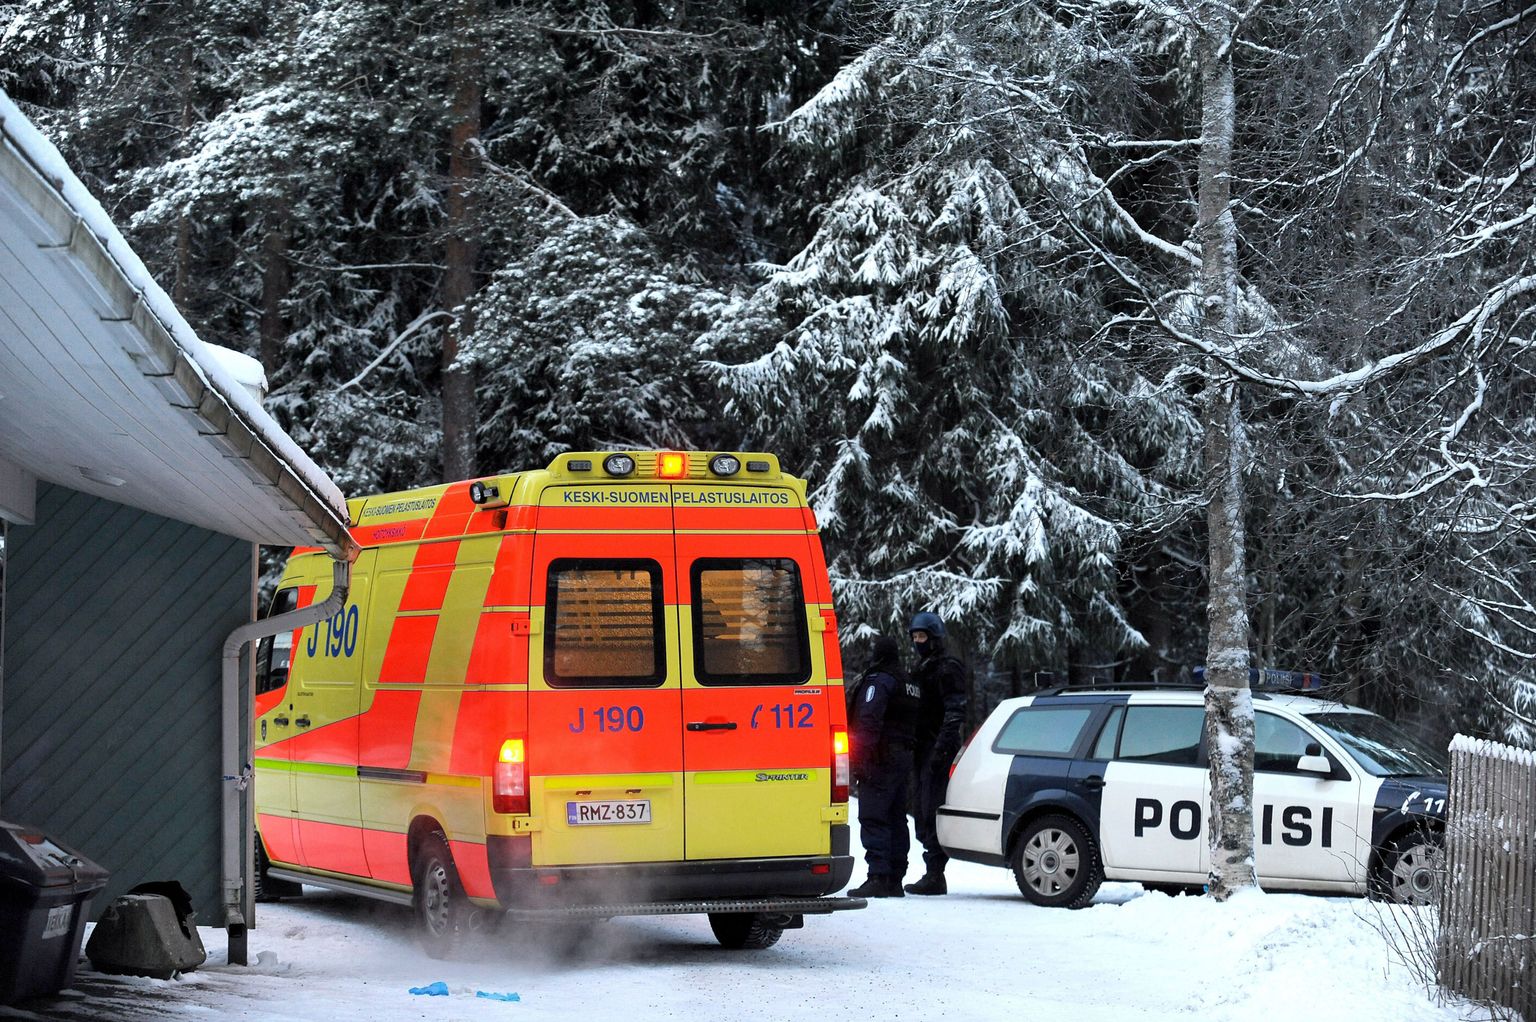 Soome politsei- ja kiirabiautod.